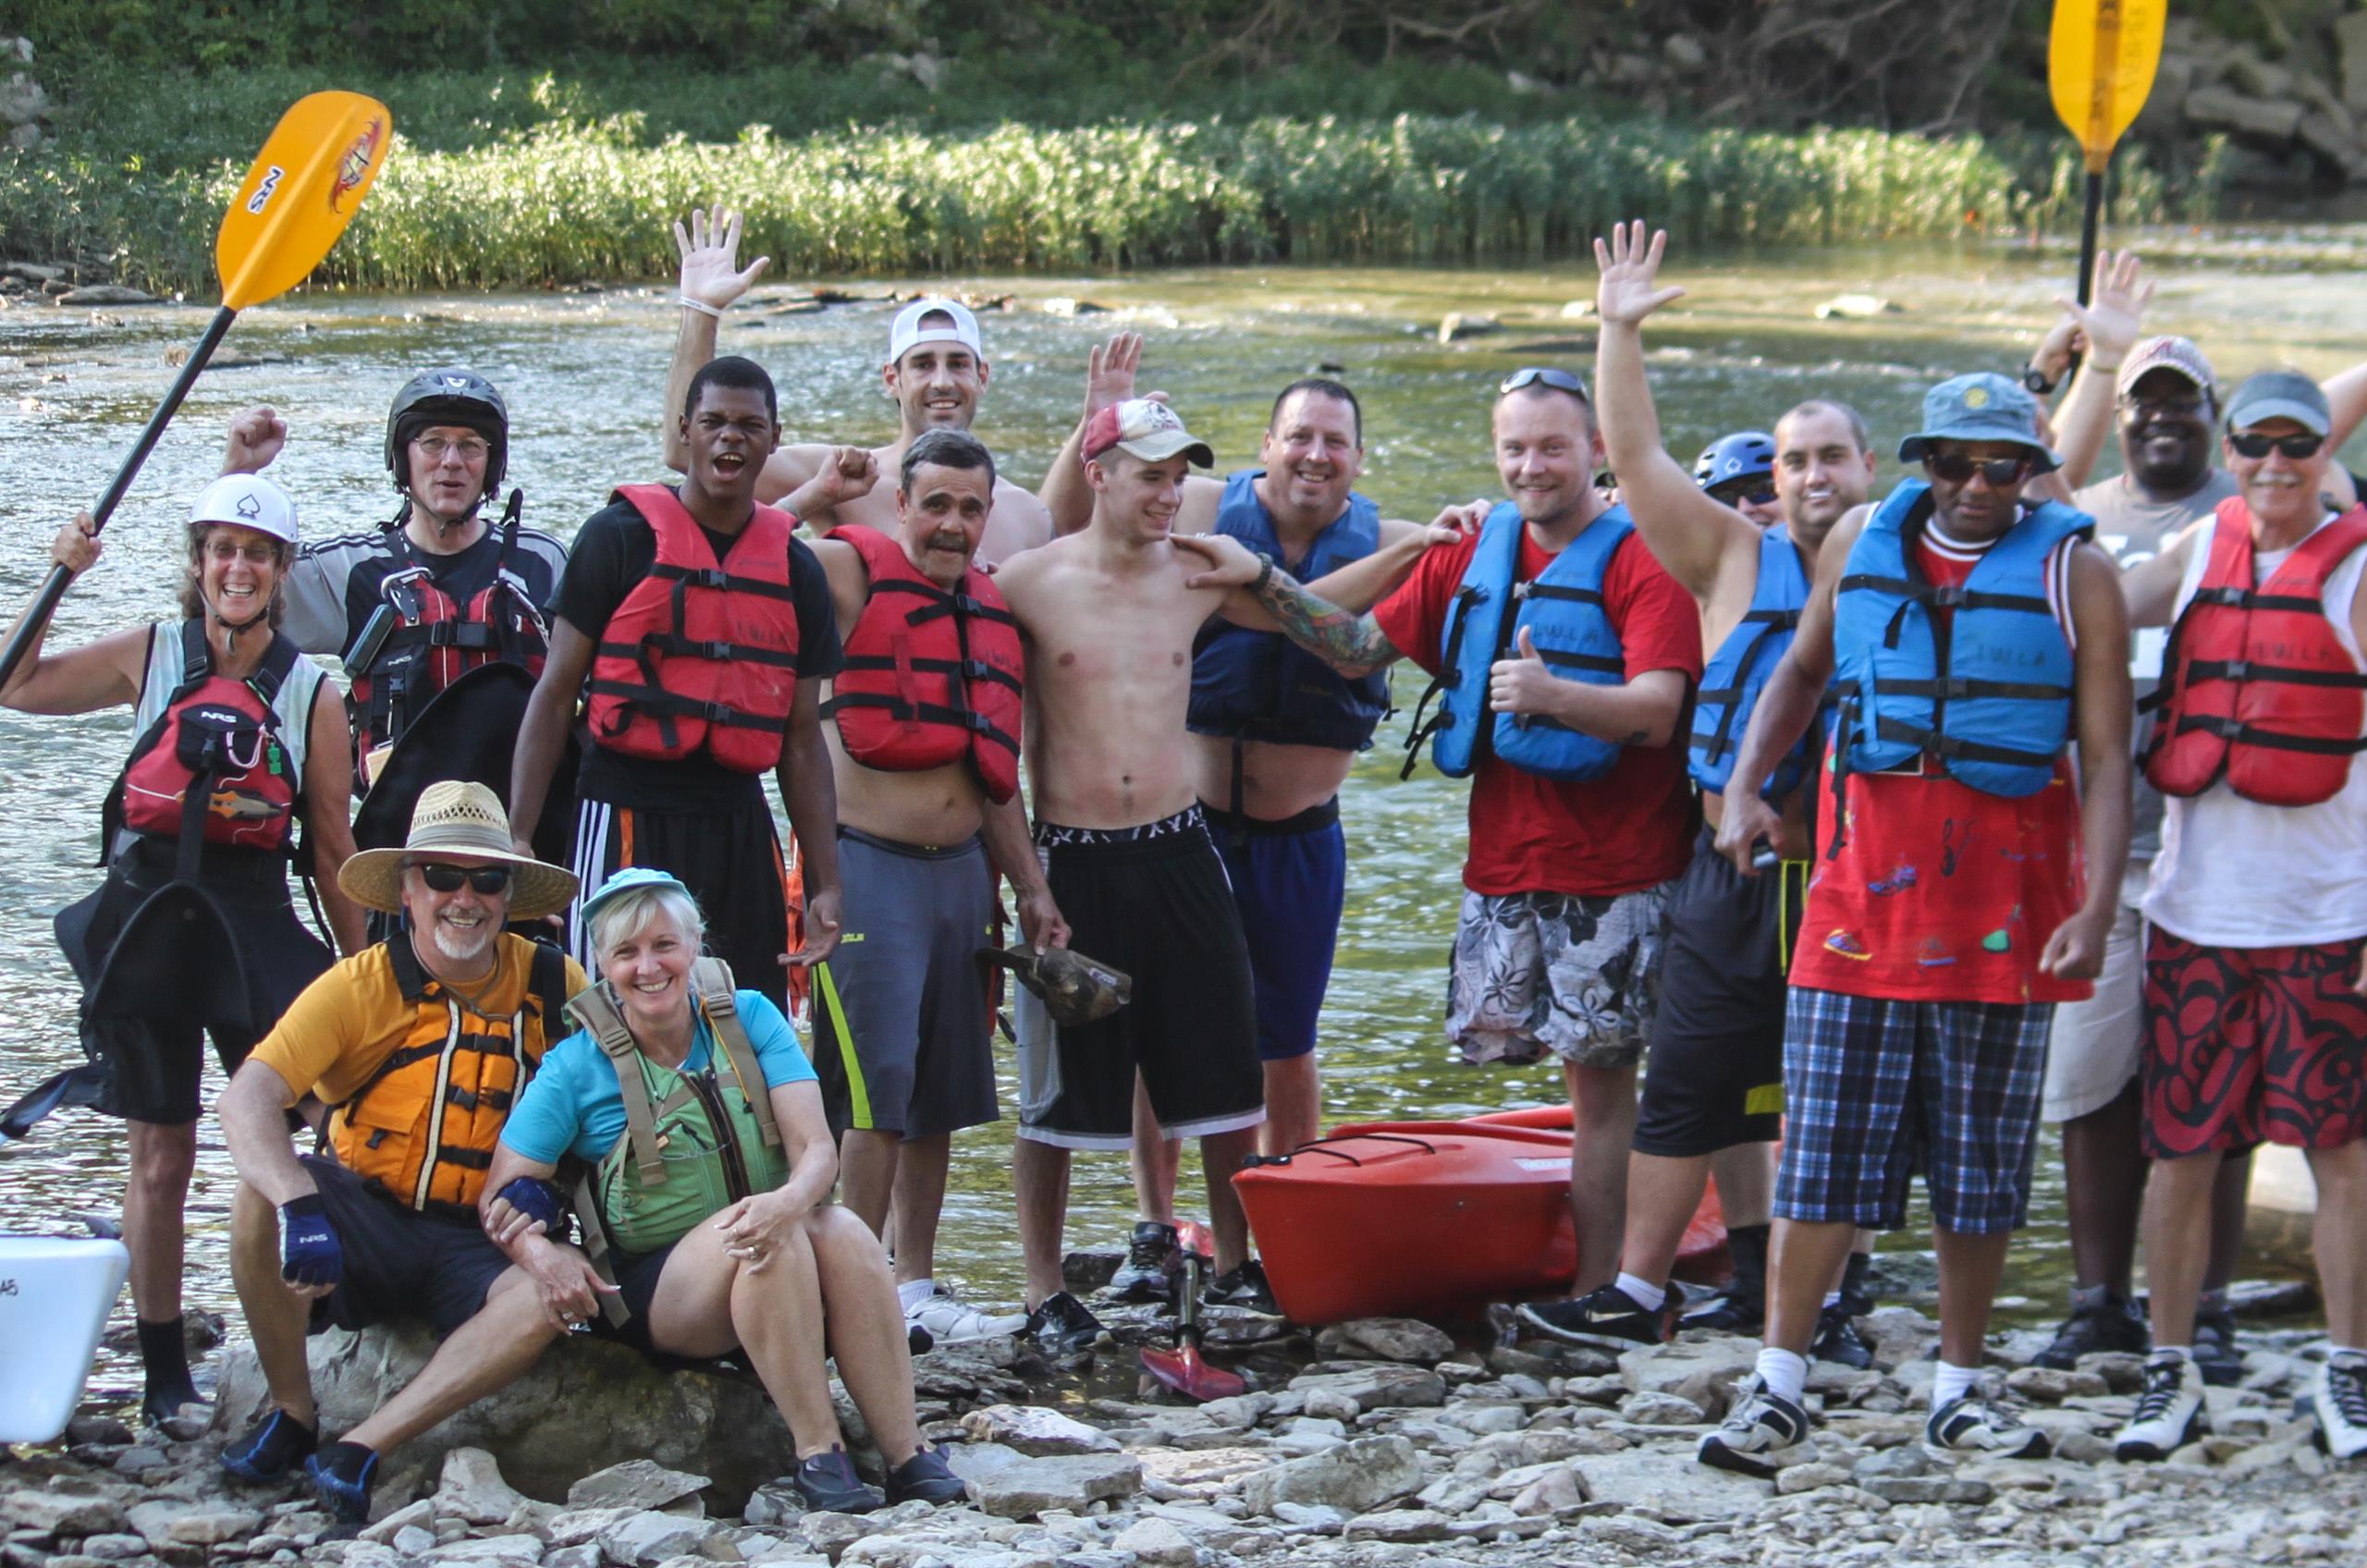 Enthusiastic paddlers from the Team River Runner program in Cincinnati - credit Janet Everhard